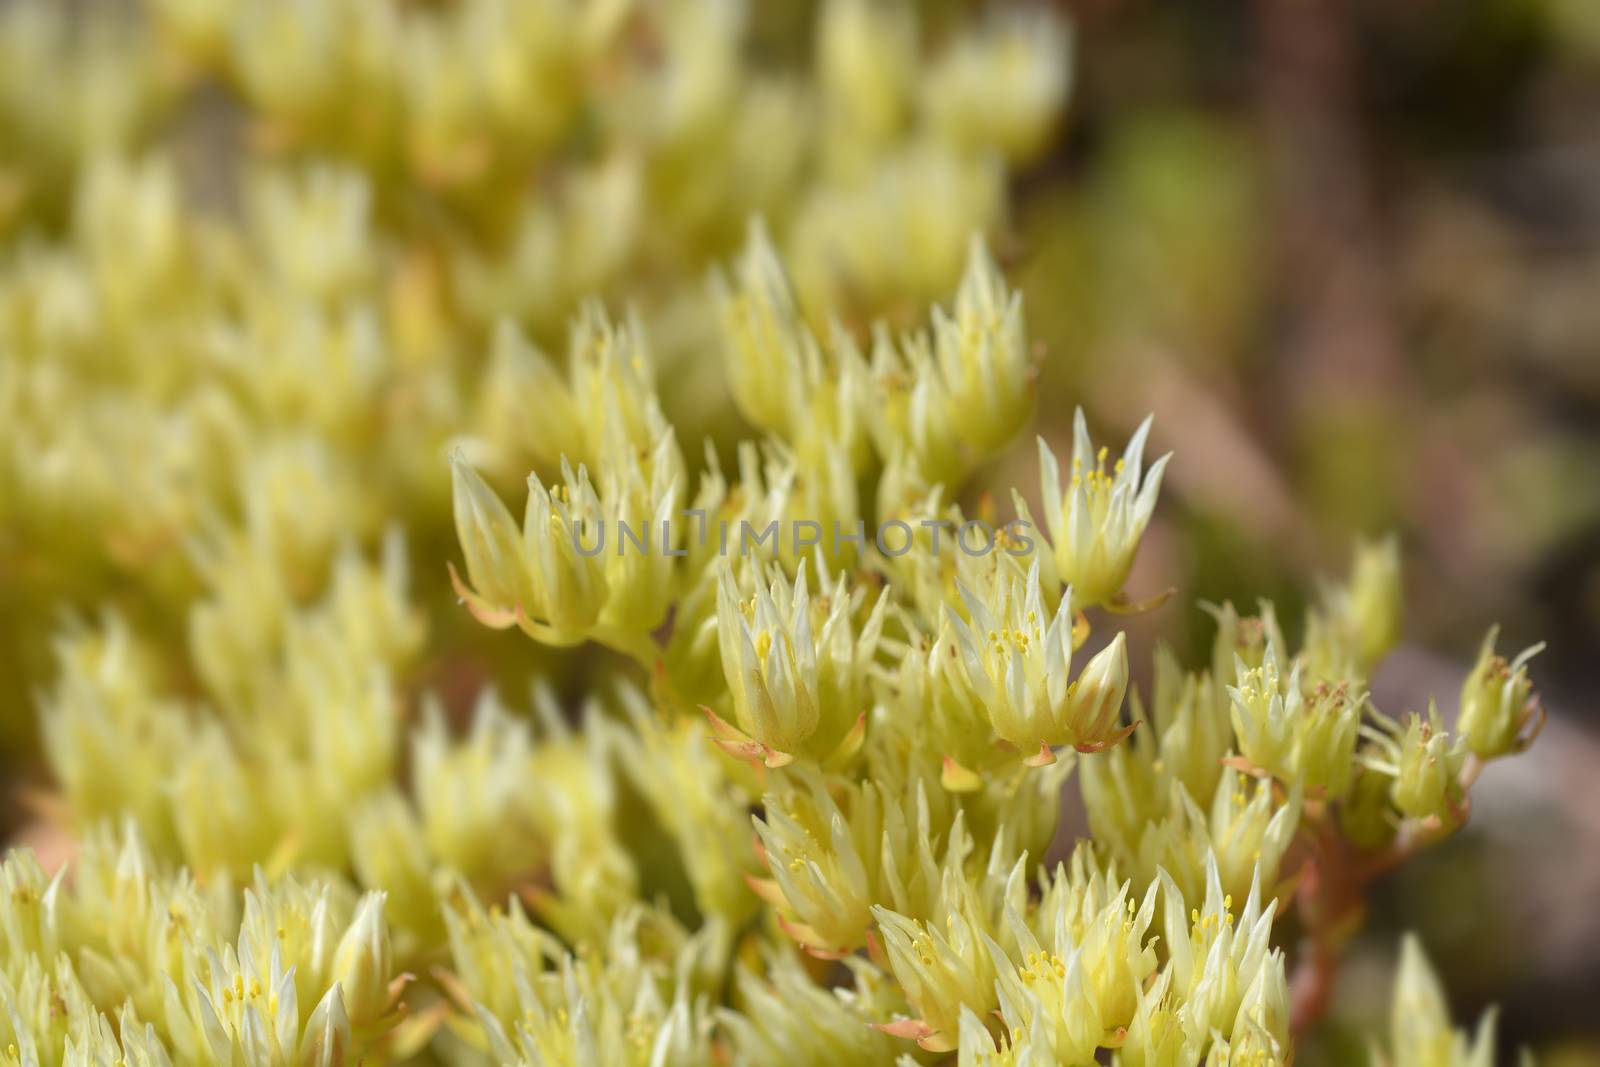 European stonecrop flower - Latin name - Sedum ochroleucum